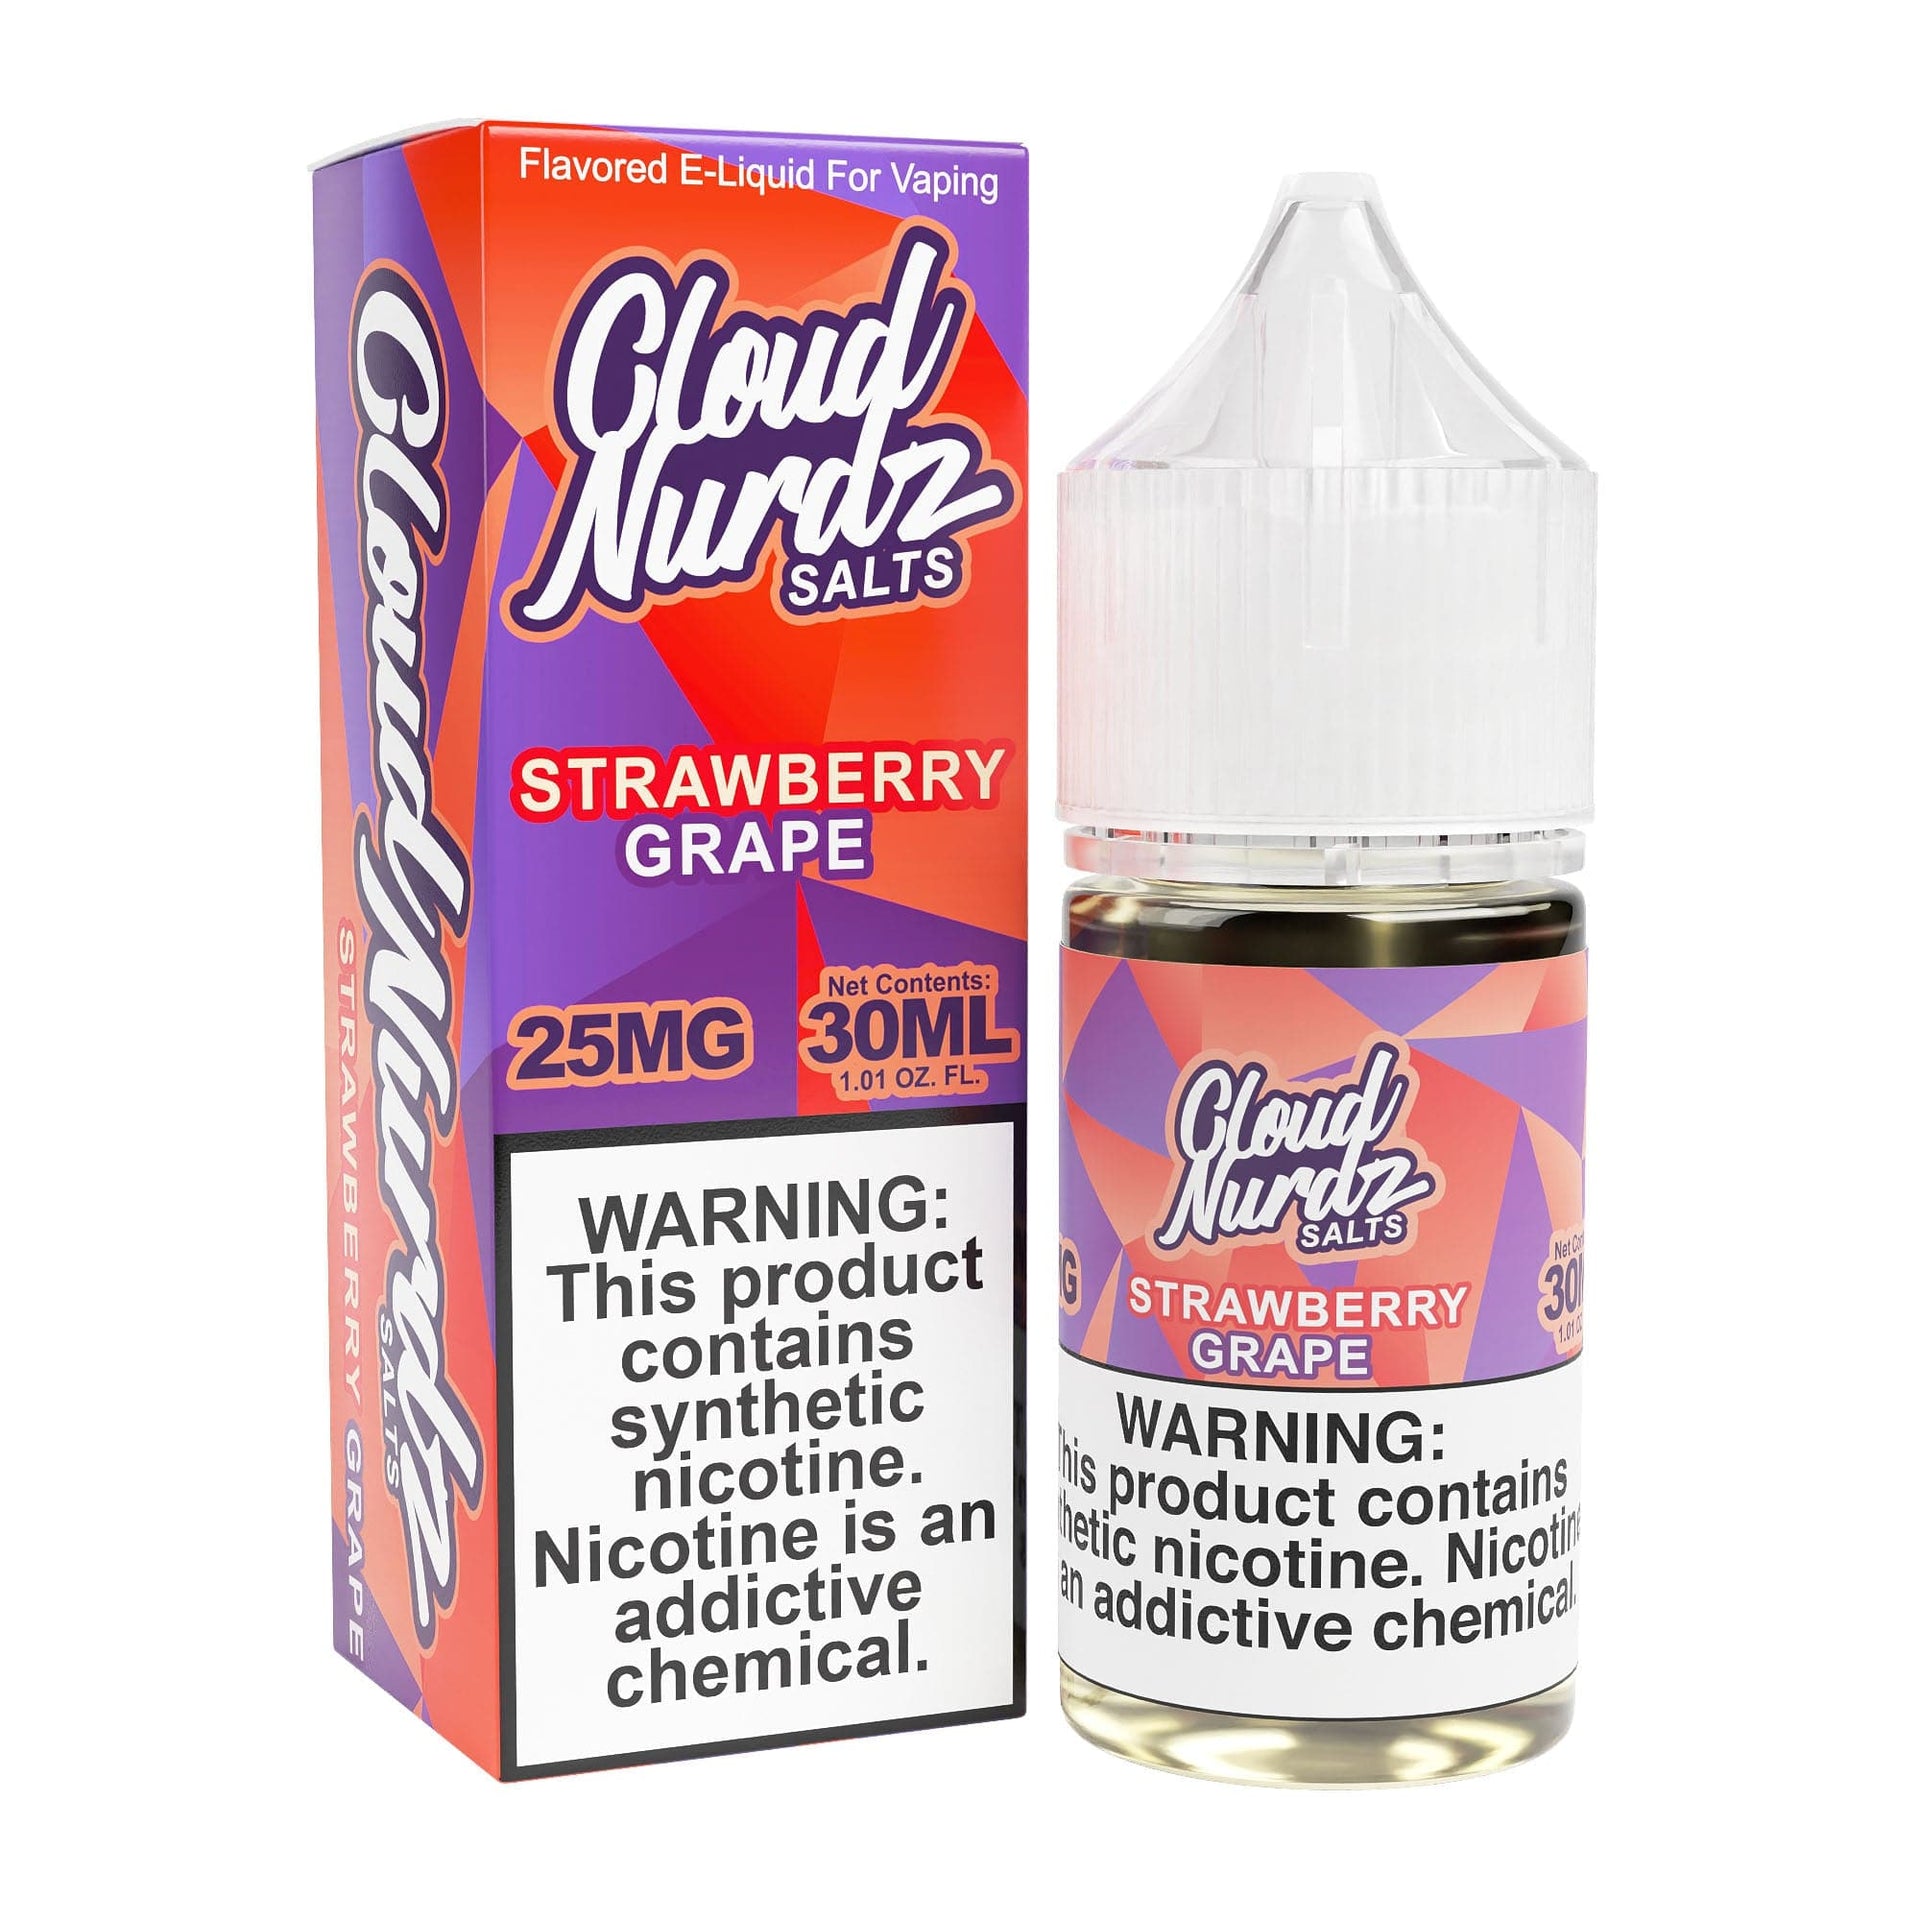 Grape Strawberry 30ml Synthetic Nic Salt Vape Juice - Cloud Nurdz